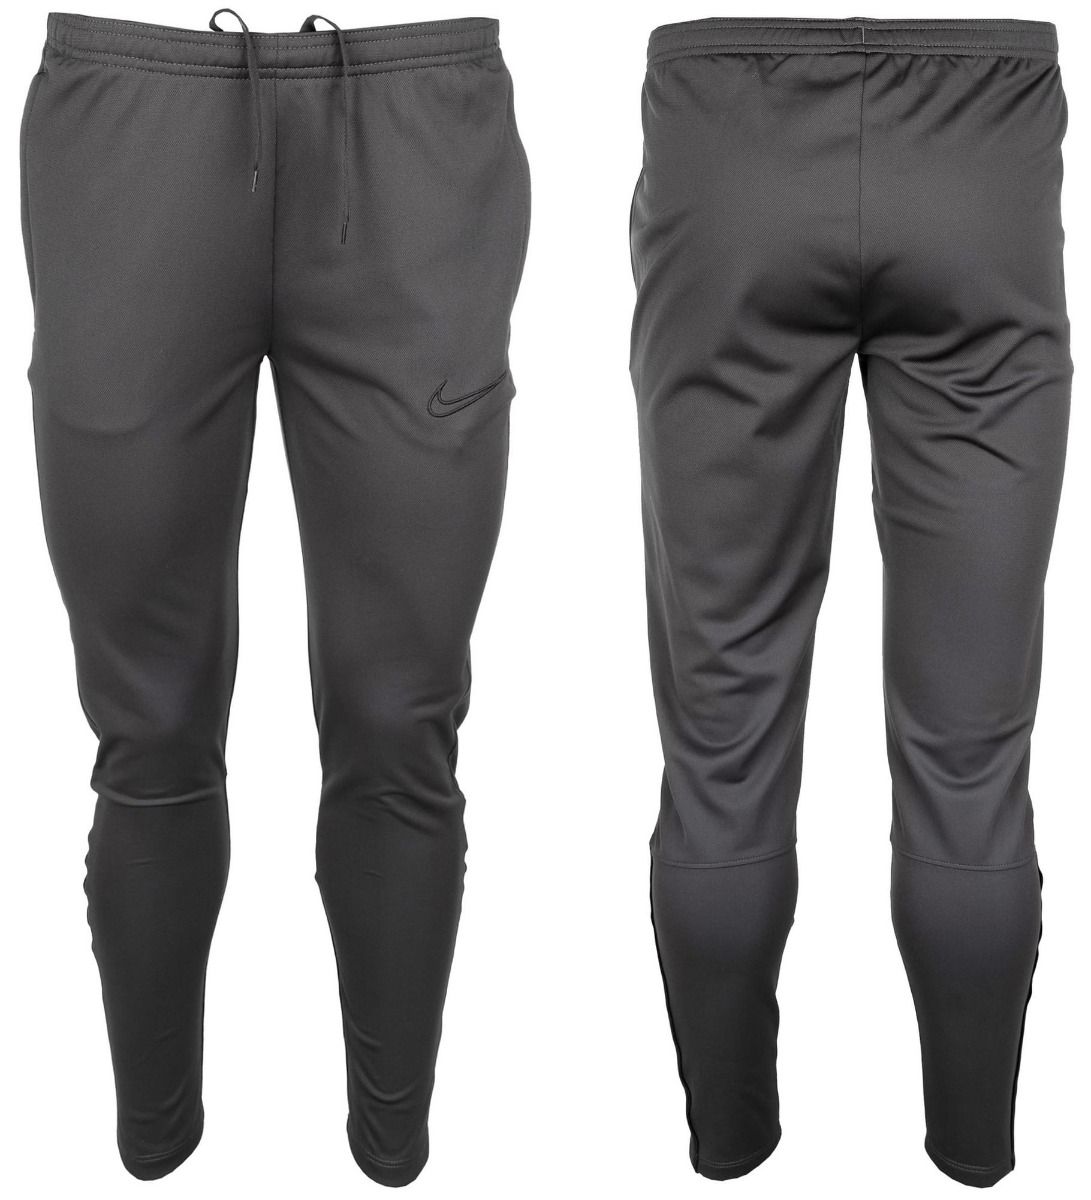 Nike Damen Trainingsanzug Dry Acd21 Trk Suit DC2096 060